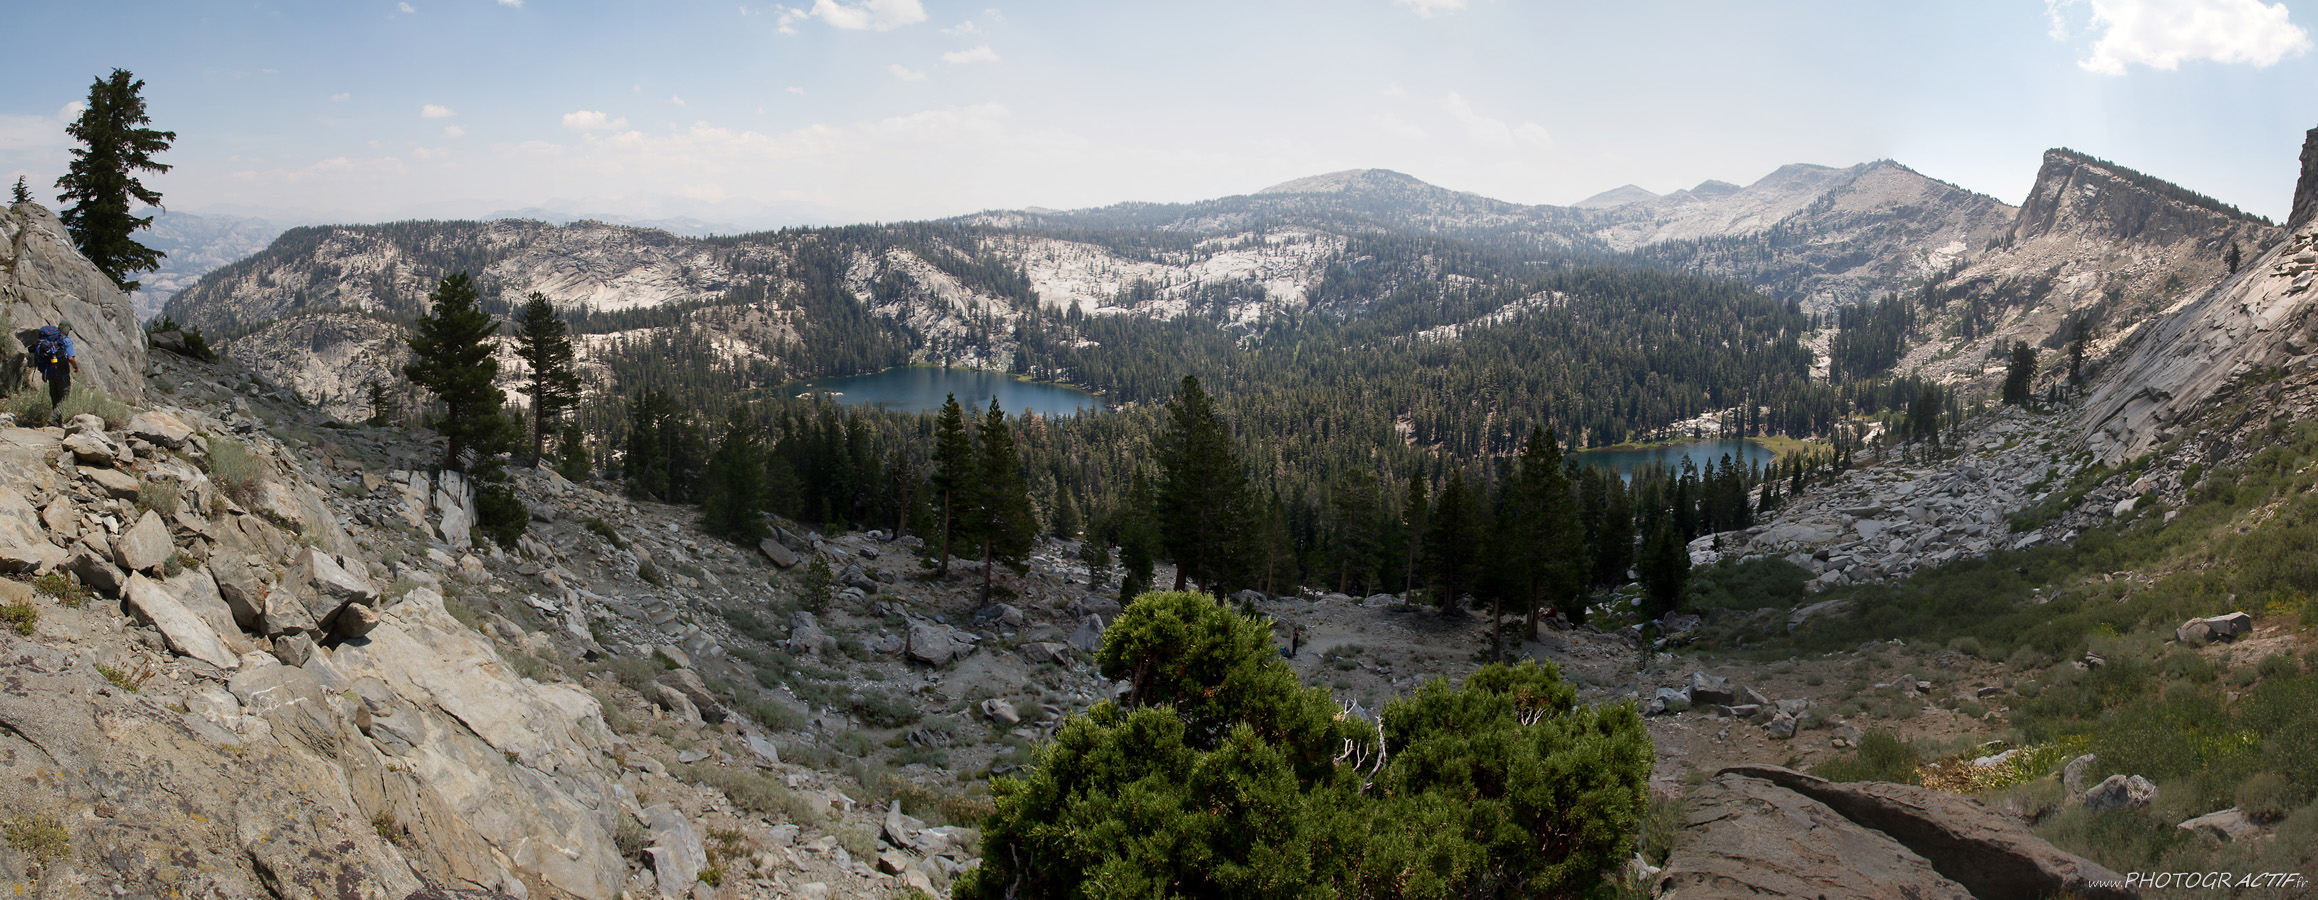 5-Yosemite 10 lakes (1)